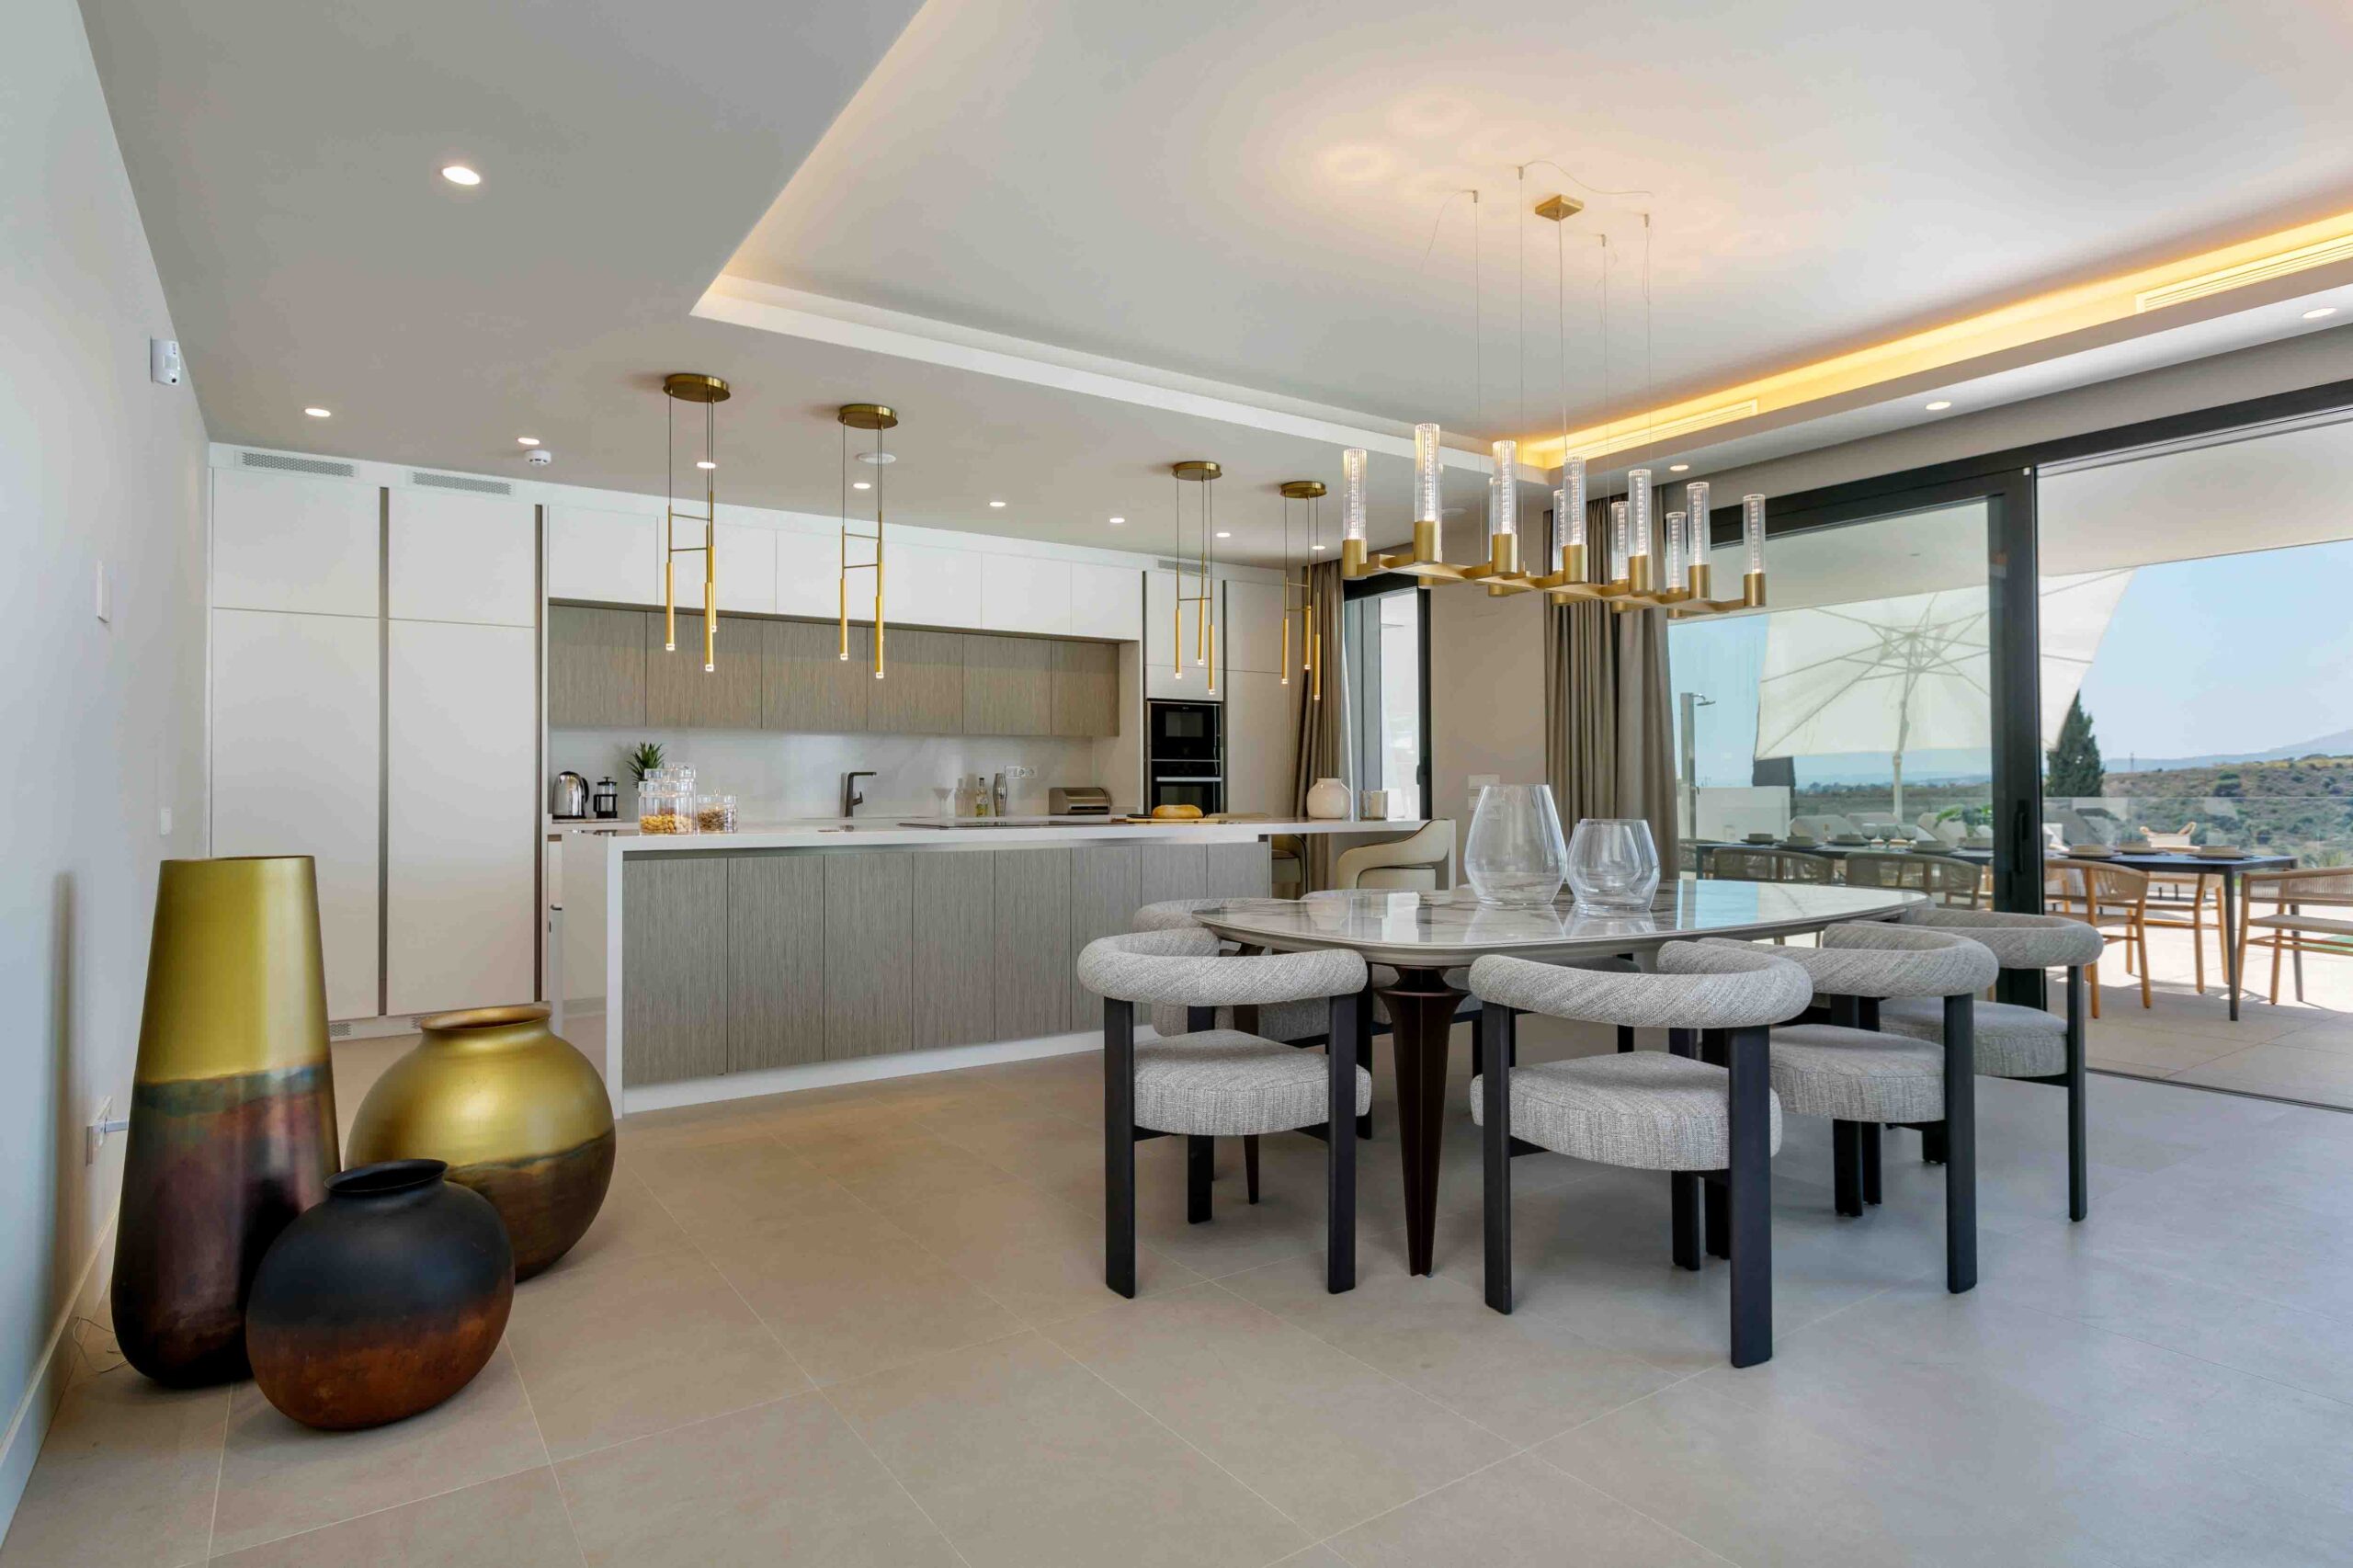 Blackshaw-interiordesign-marbella-furnishing-homes-project (4)